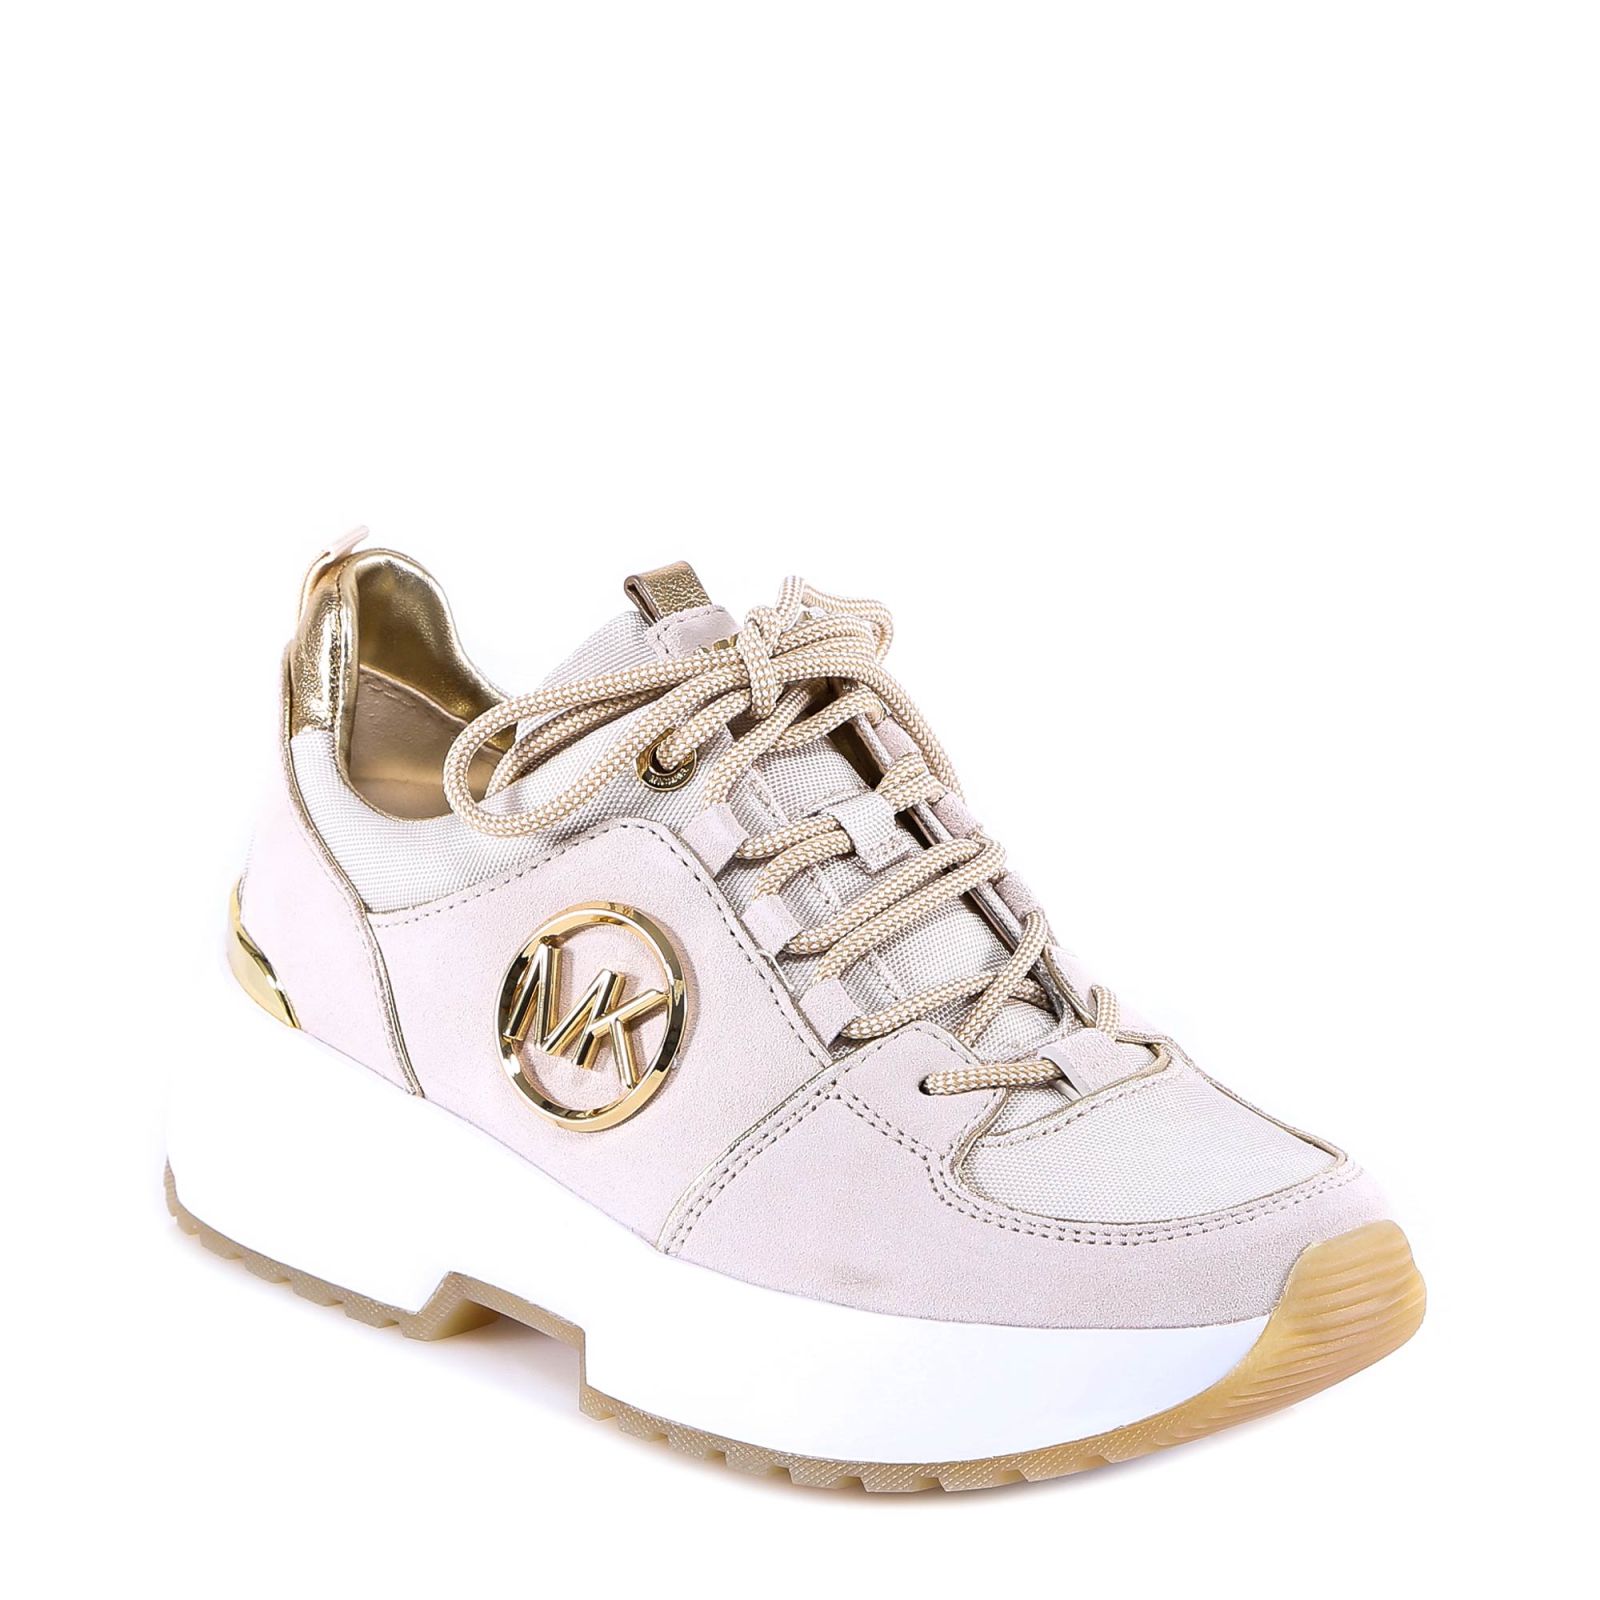 Michael Kors Michael Kors Cosmo Trainer Sneakers - White - 10940787 ...